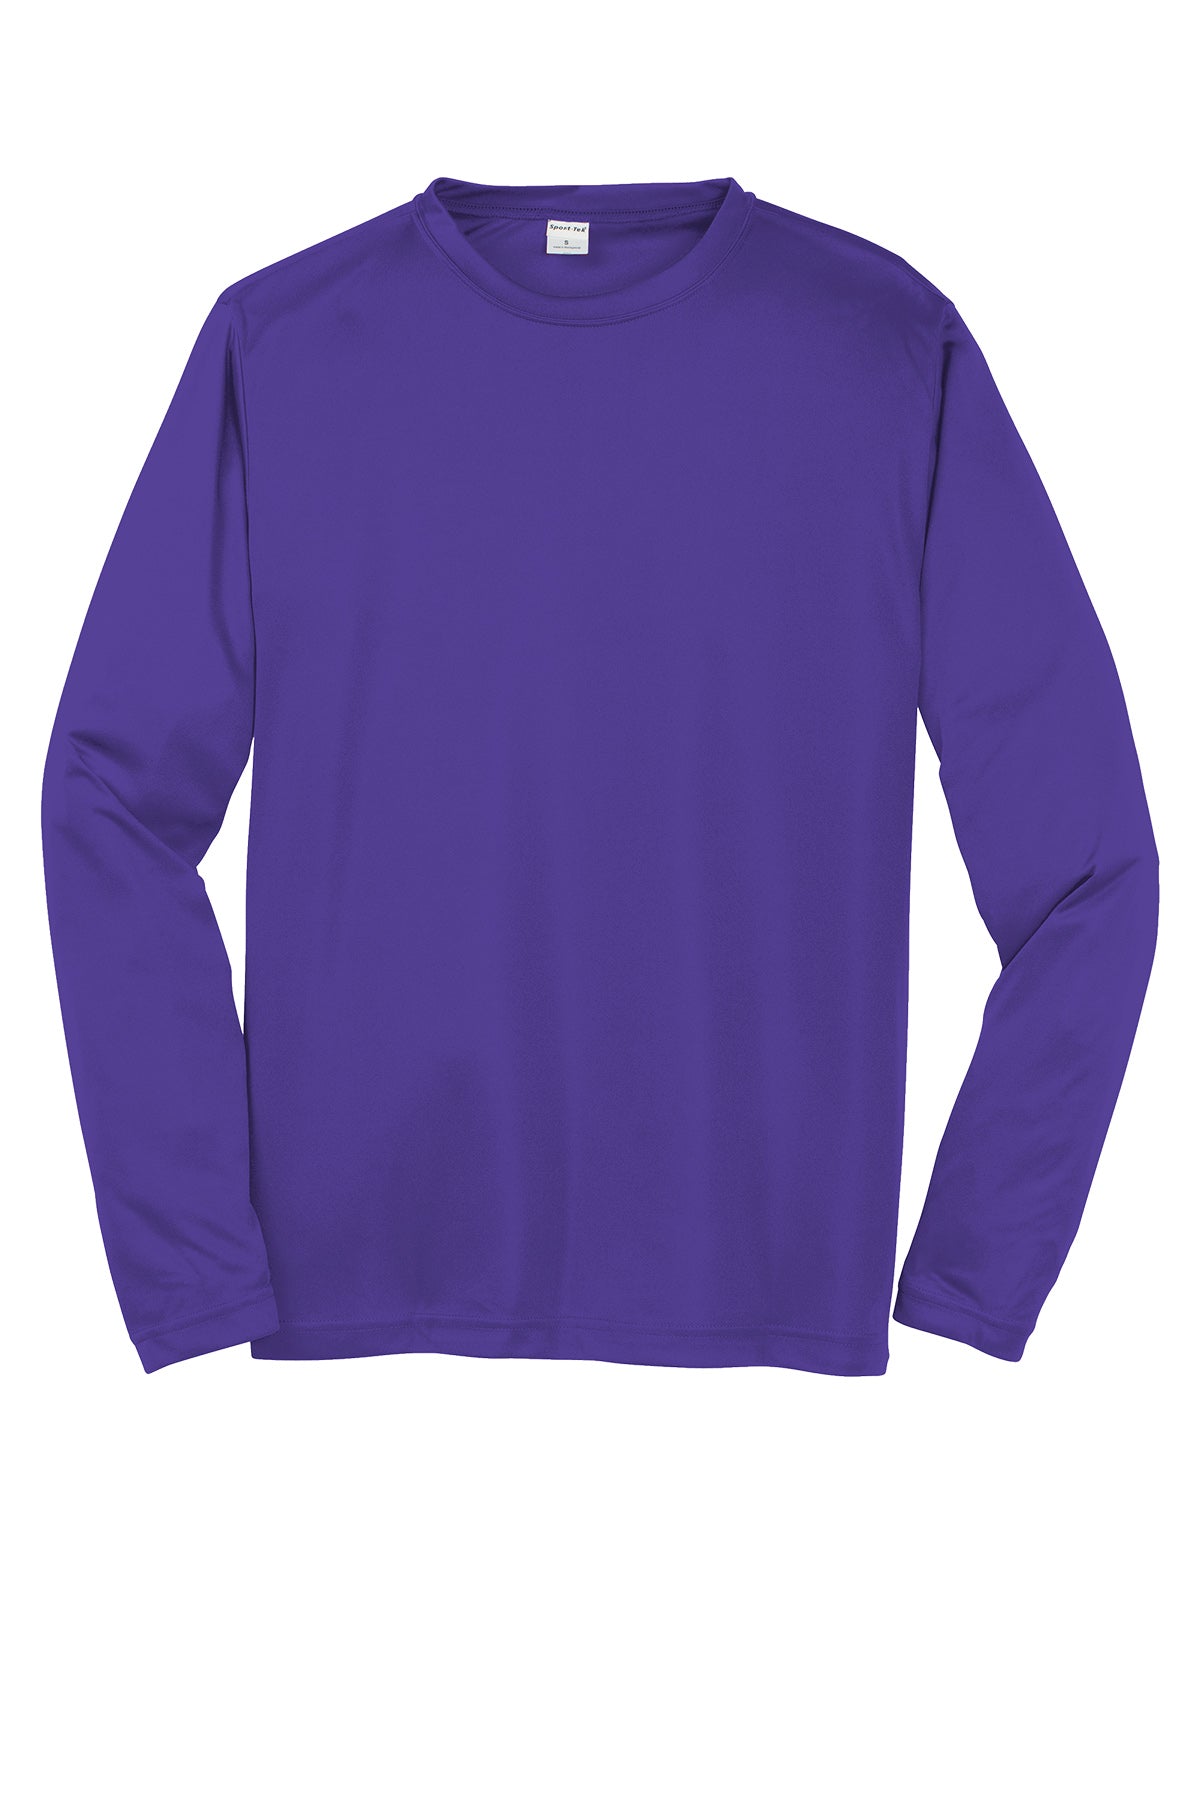 Sport-Tek St350Ls Polyester Adult Long Sleeve T-Shirt Ad Small / Purple